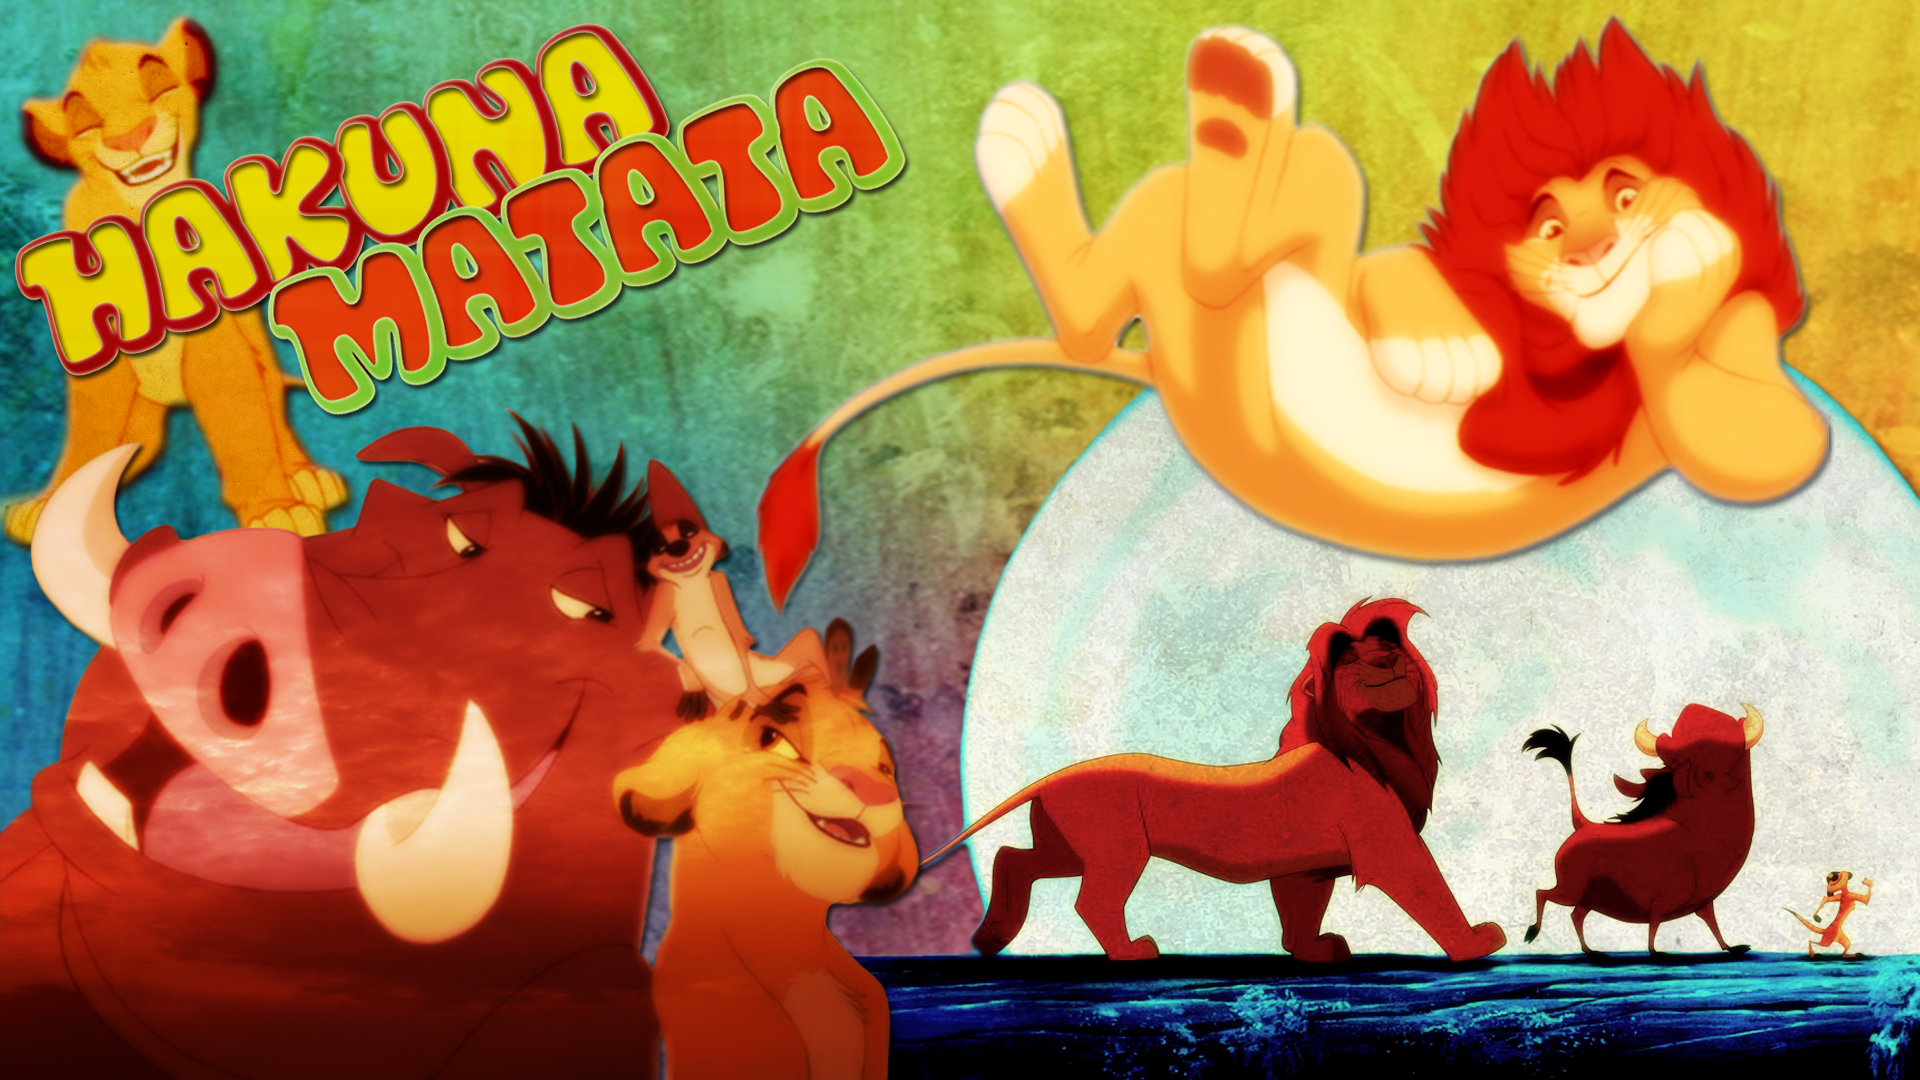 Hakuna Matata desktop wallpaper featuring Simba, Pumbaa, and Timon from The Lion King (1994).